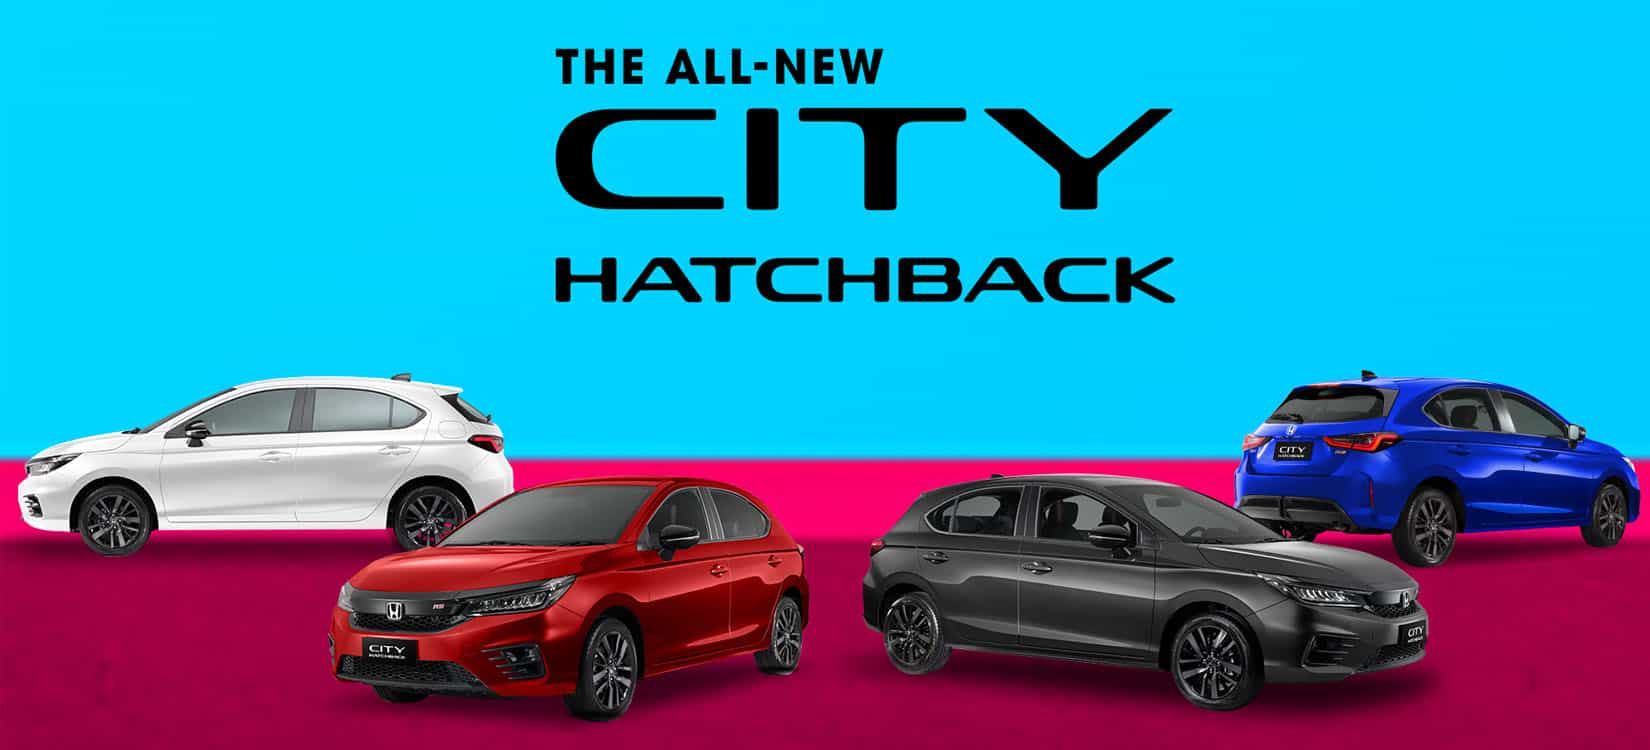 All-New Honda City Hatchback leads countryâ€™s B-segment hatchback sales